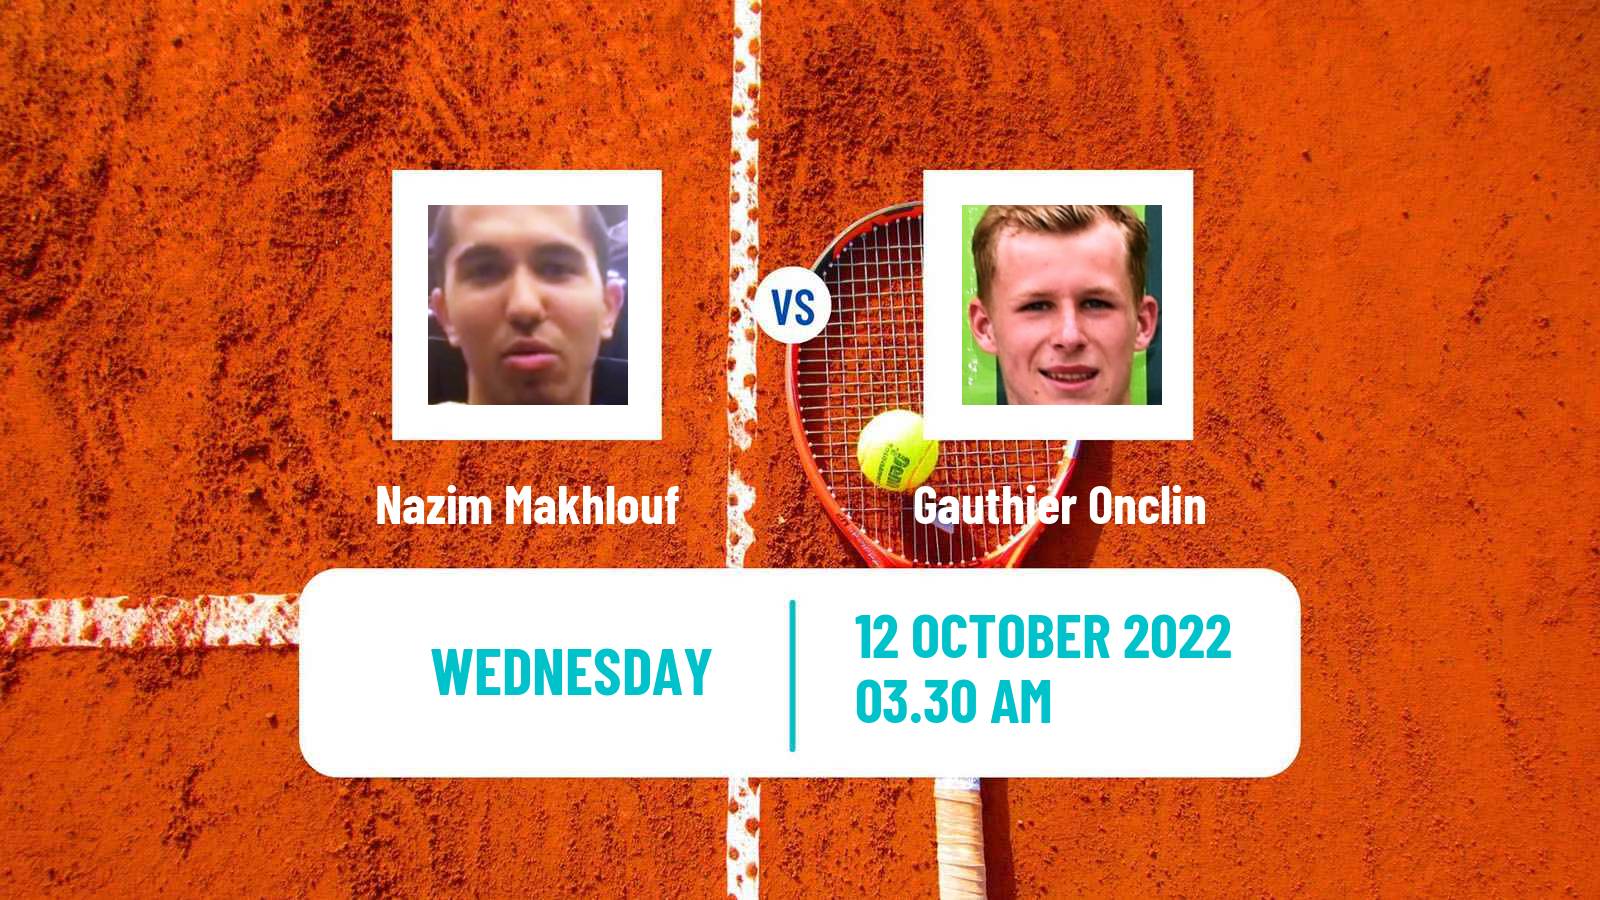 Tennis ITF Tournaments Nazim Makhlouf - Gauthier Onclin